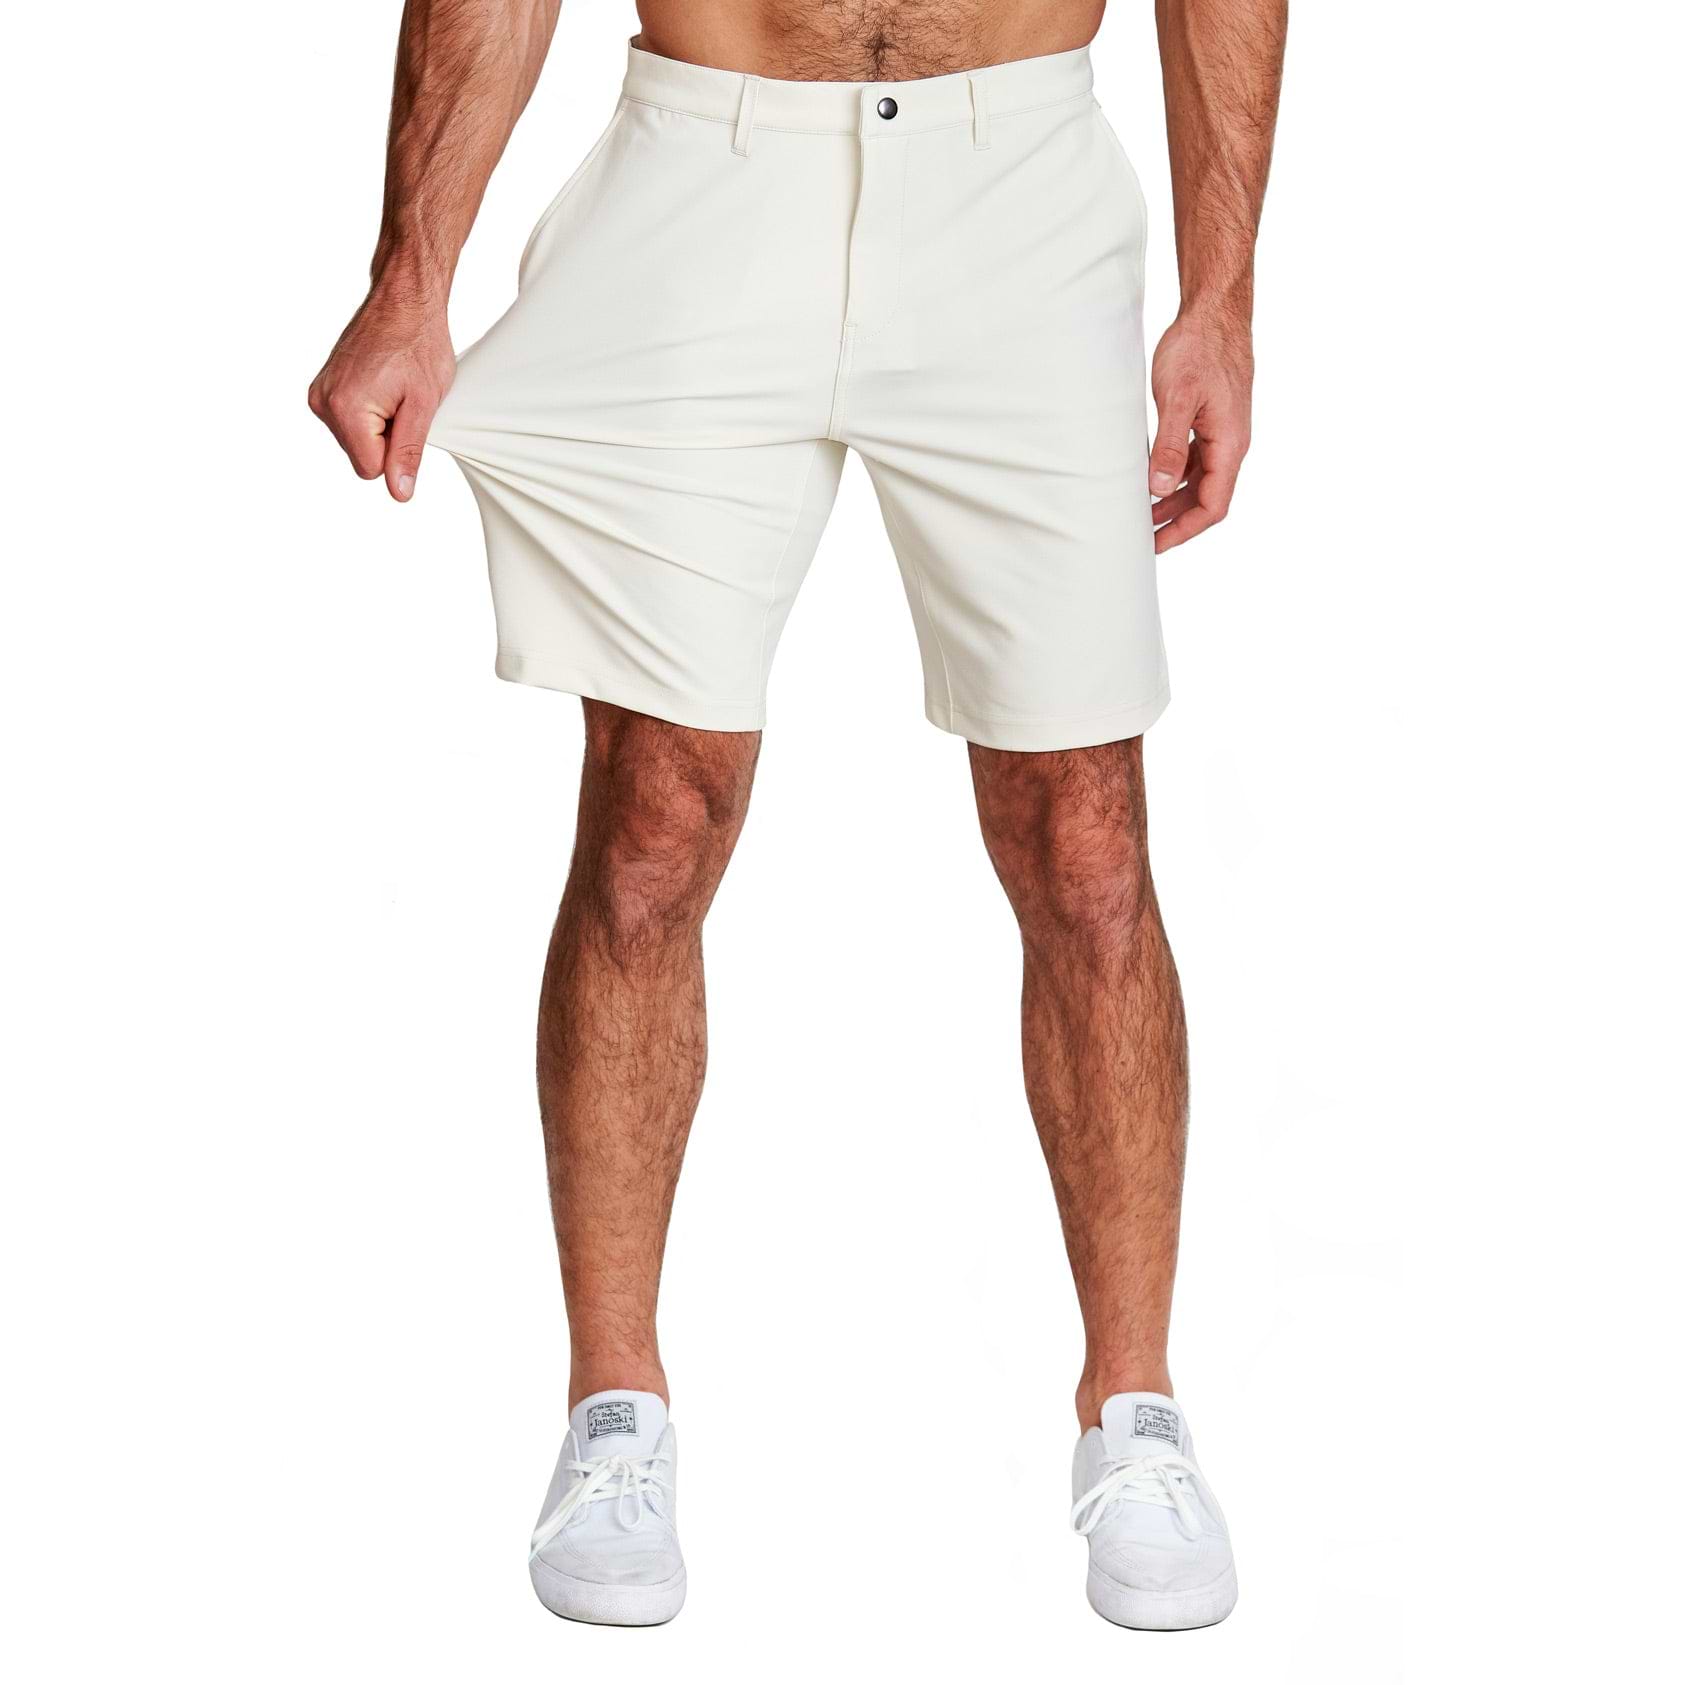 Athletic Fit Shorts - Light Khaki